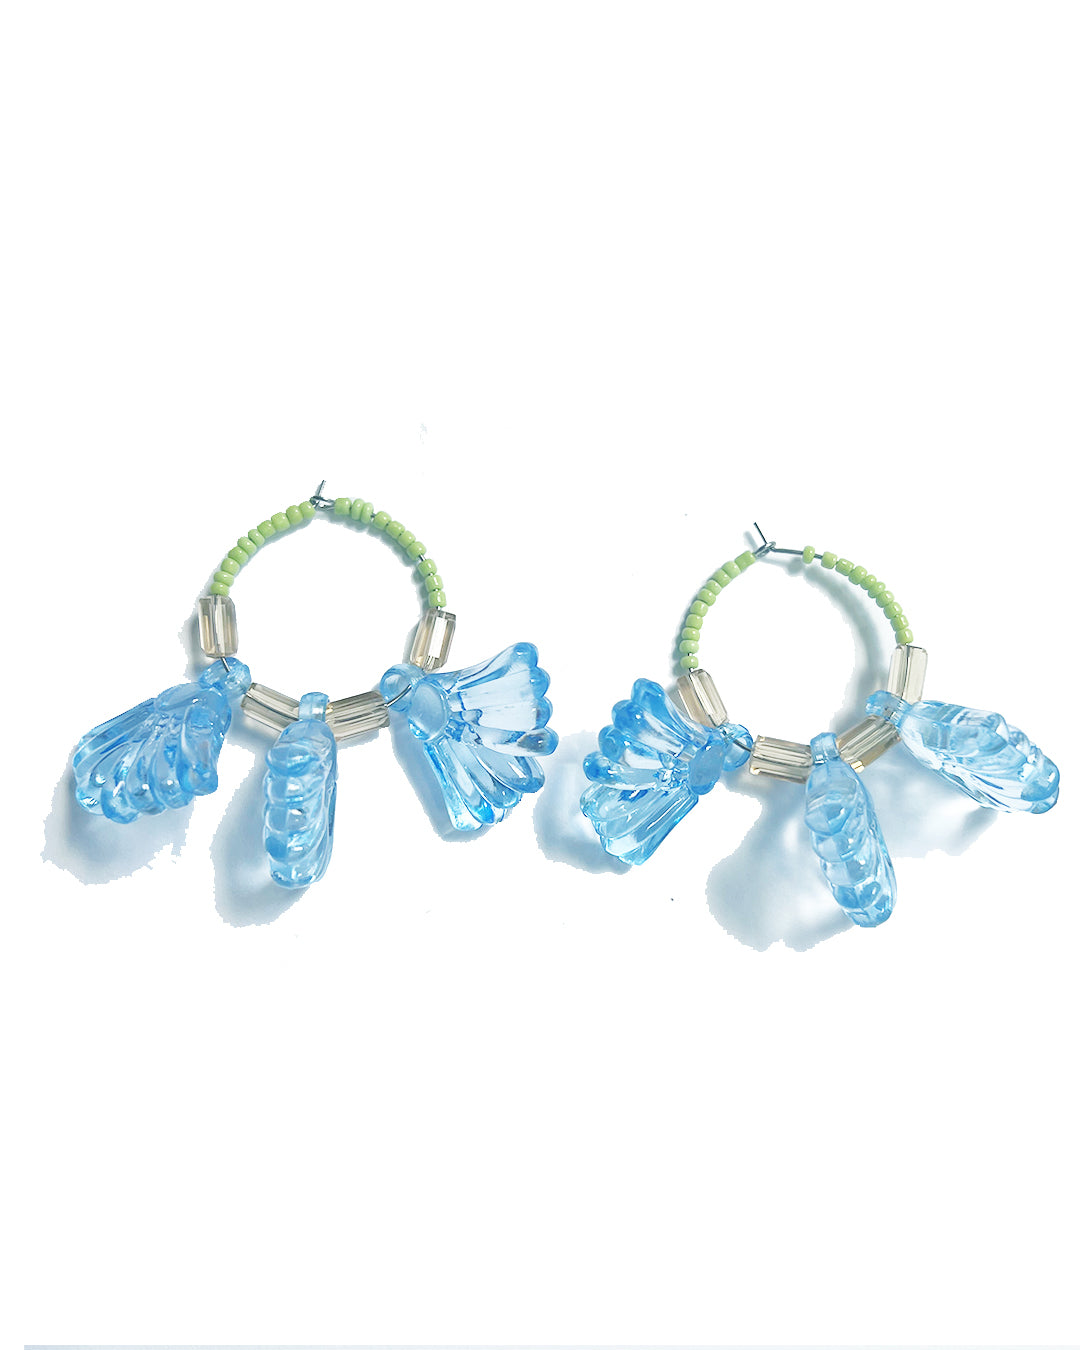 Sky Blue Peach Lime Fiesta Earrings  | cukimber designs